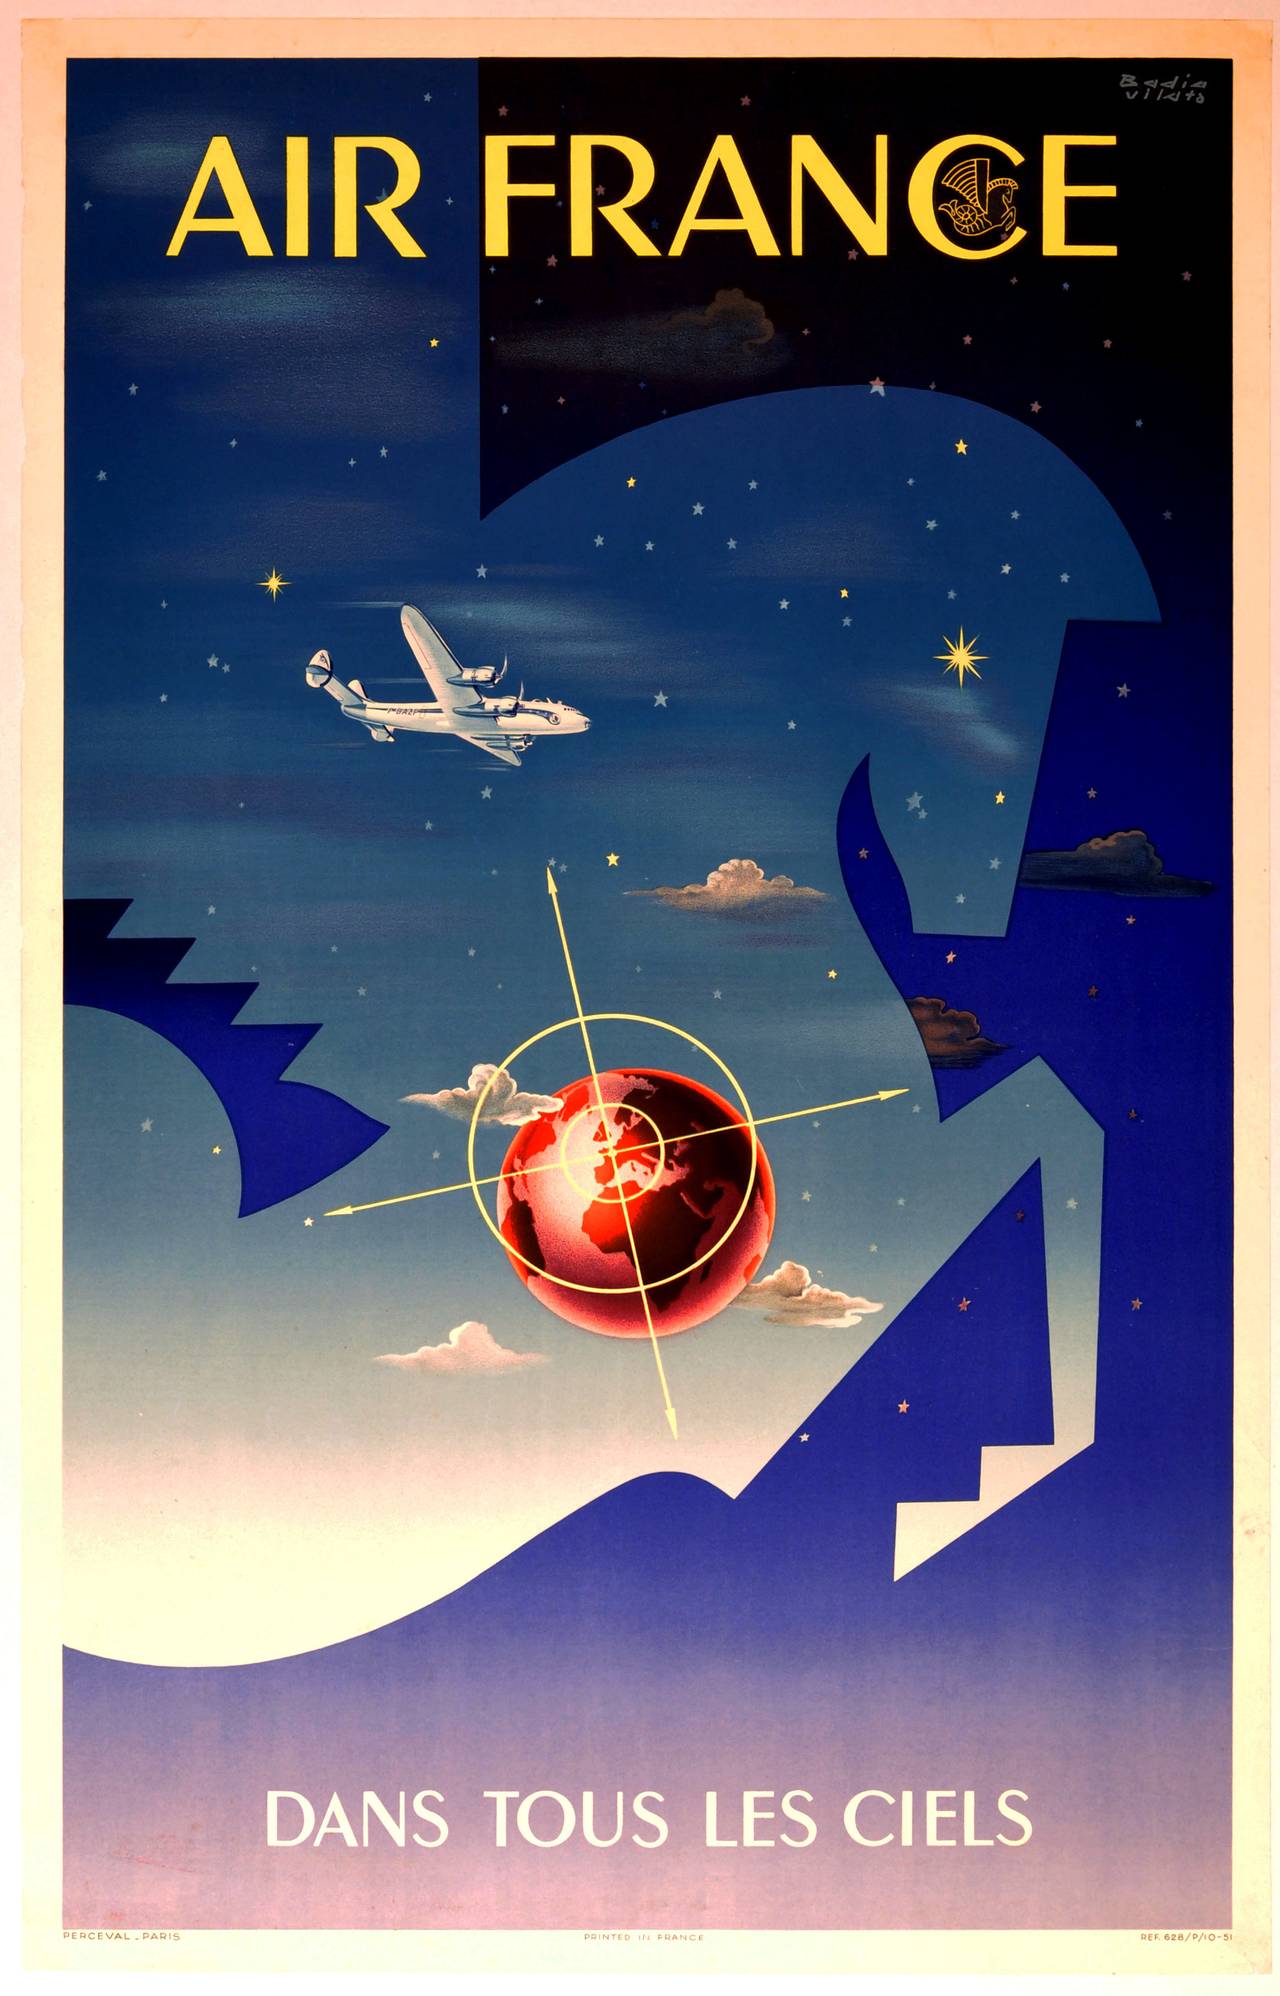 Vilato Badia Print - Original vintage Art Deco style advertising poster for Air France